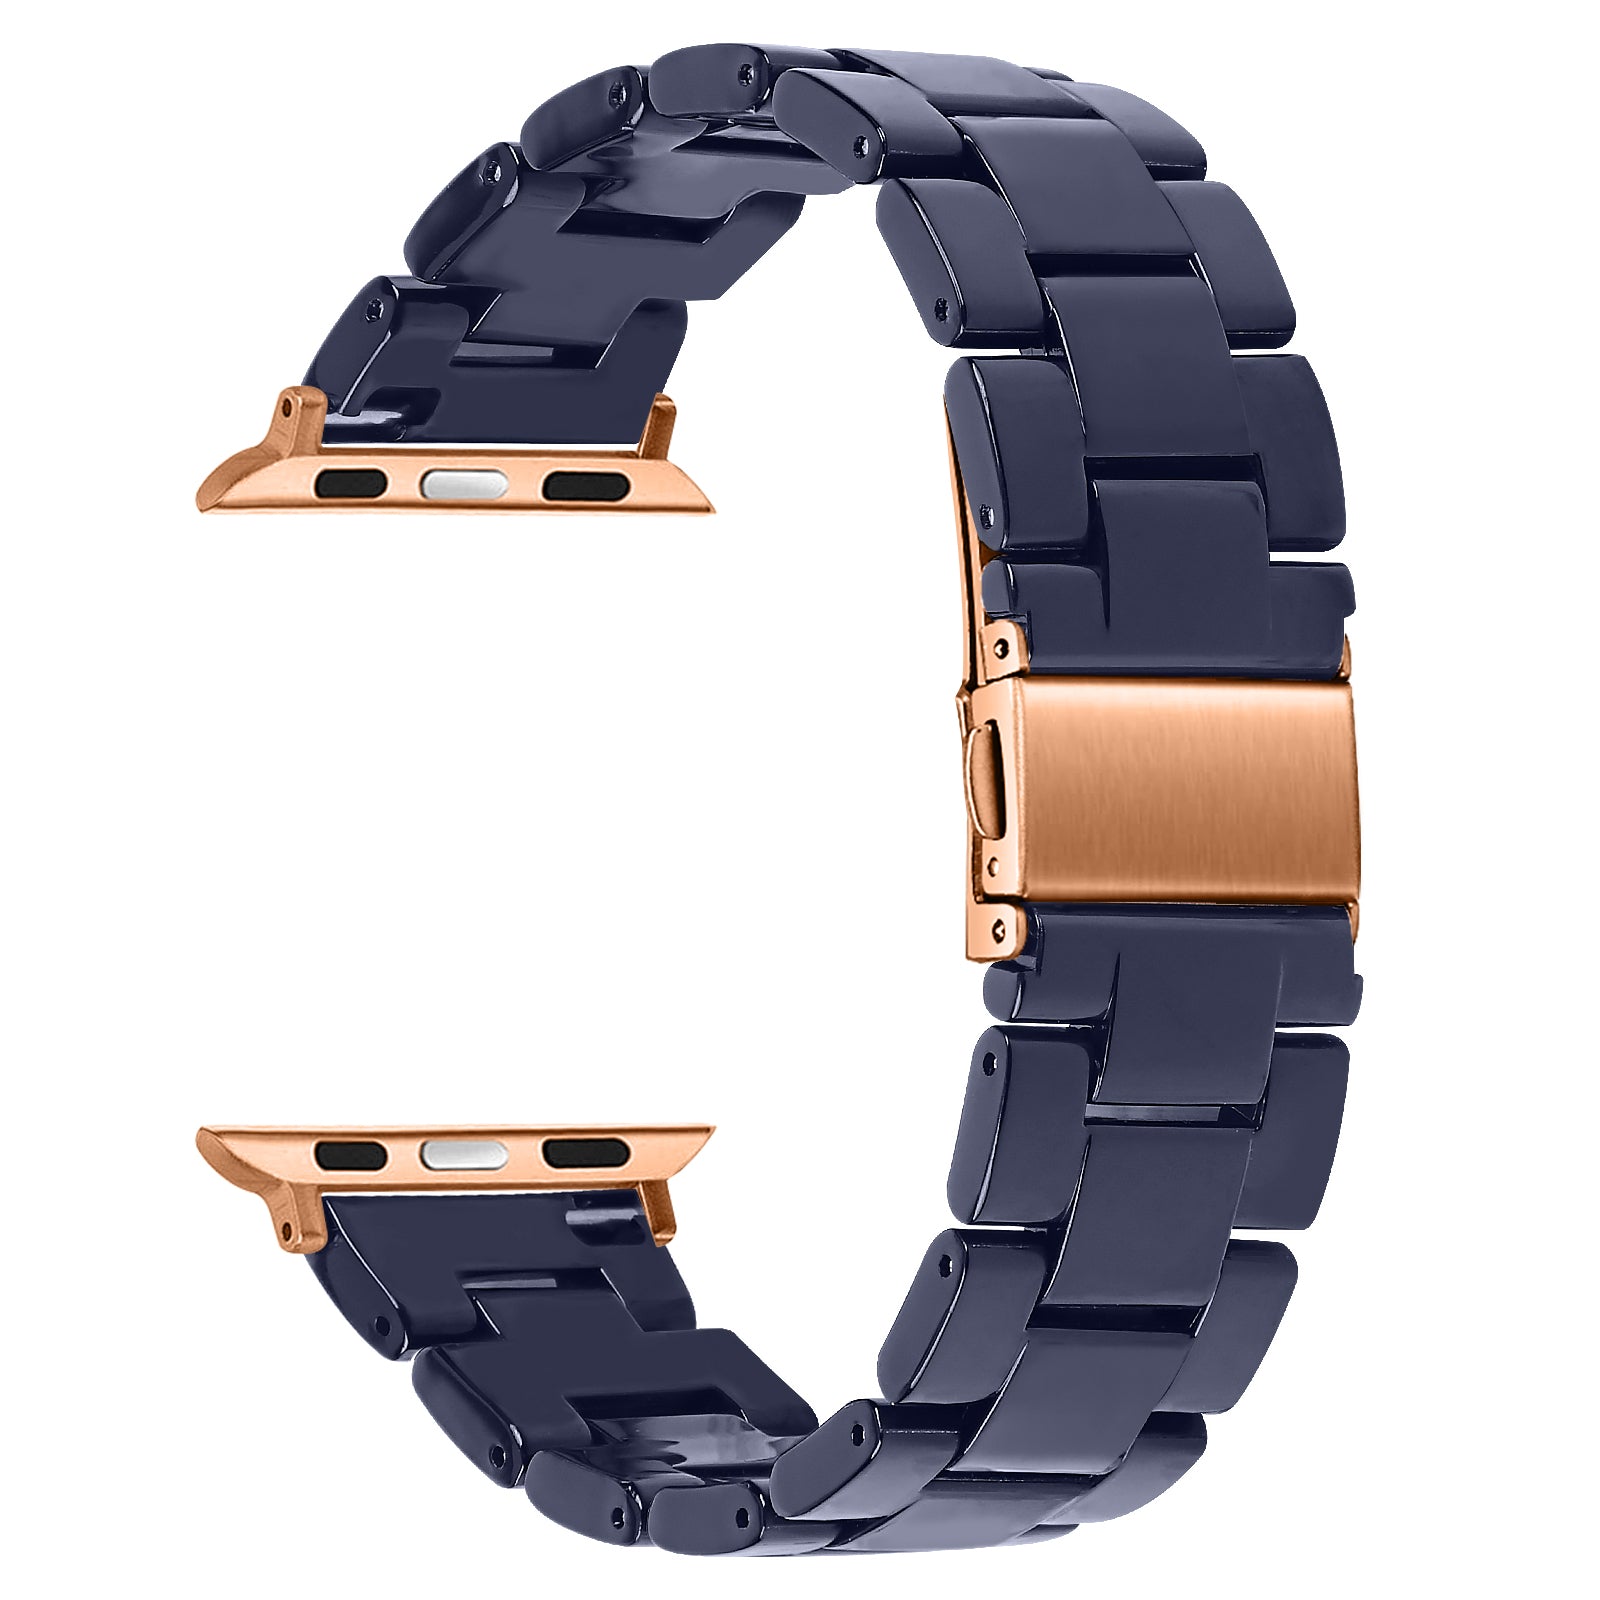 TEEPOLLO Grey Resin Apple Watch Band Bracelet Strap for Women Girl